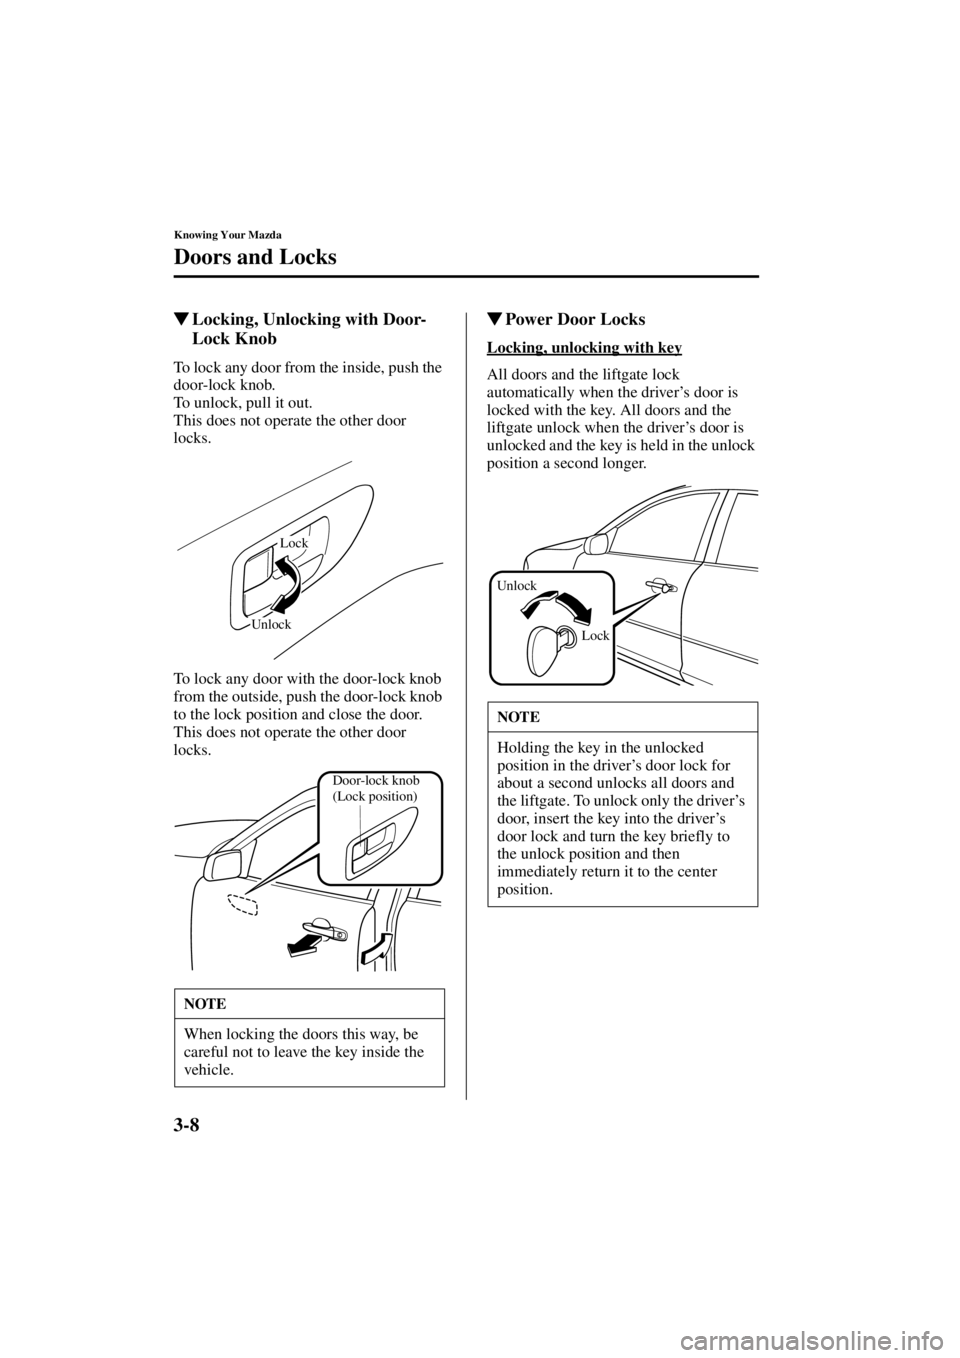 MAZDA MODEL 3 4-DOOR 2004  Owners Manual 3-8
Knowing Your Mazda
Doors and Locks
Form No. 8S18-EA-03I
Locking, Unlocking with Door-
Lock Knob
To lock any door from the inside, push the 
door-lock knob.
To unlock, pull it out.
This does not o